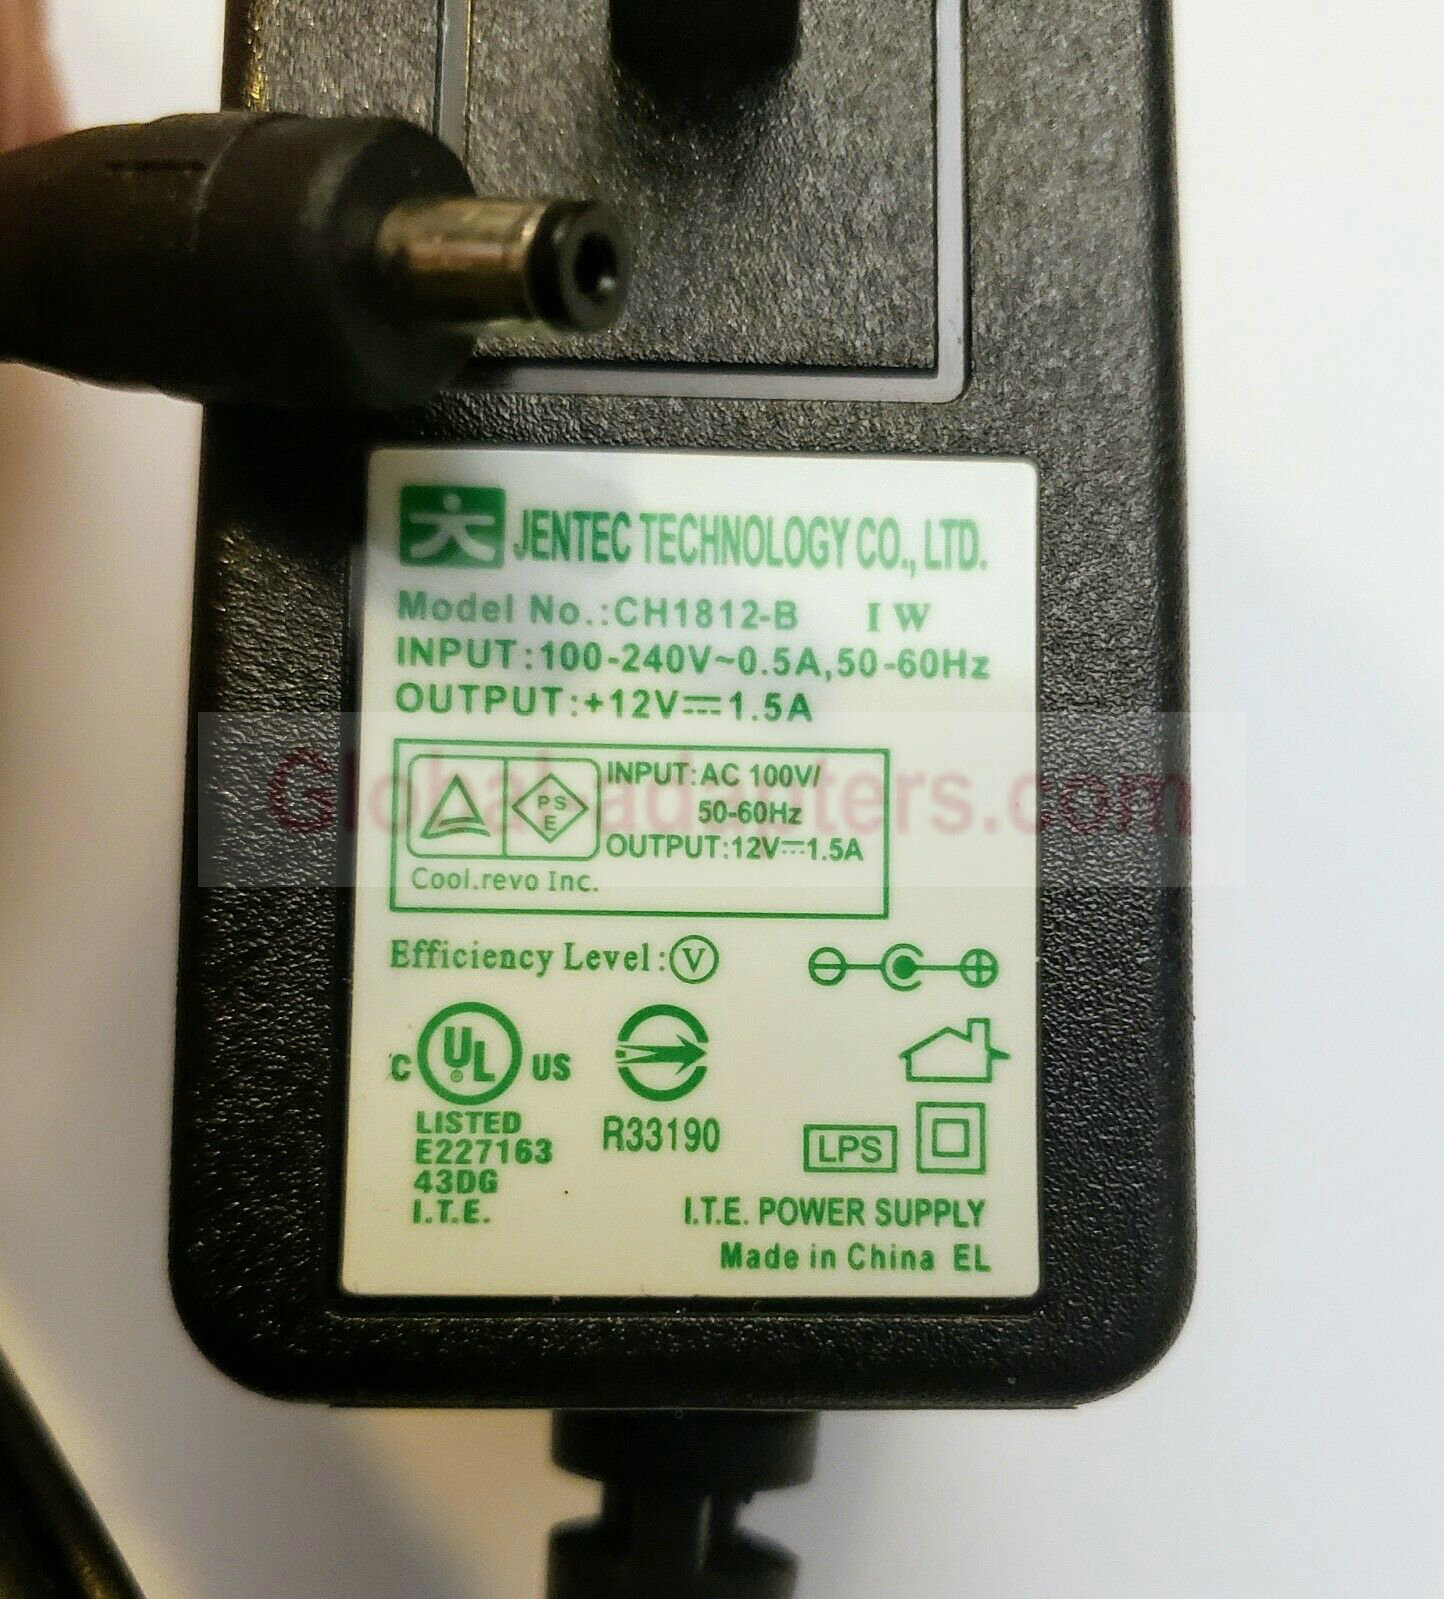 NEW 12V 1.5A JENTEC CH1812-B TECHNOLOGY AC Adapter - Click Image to Close